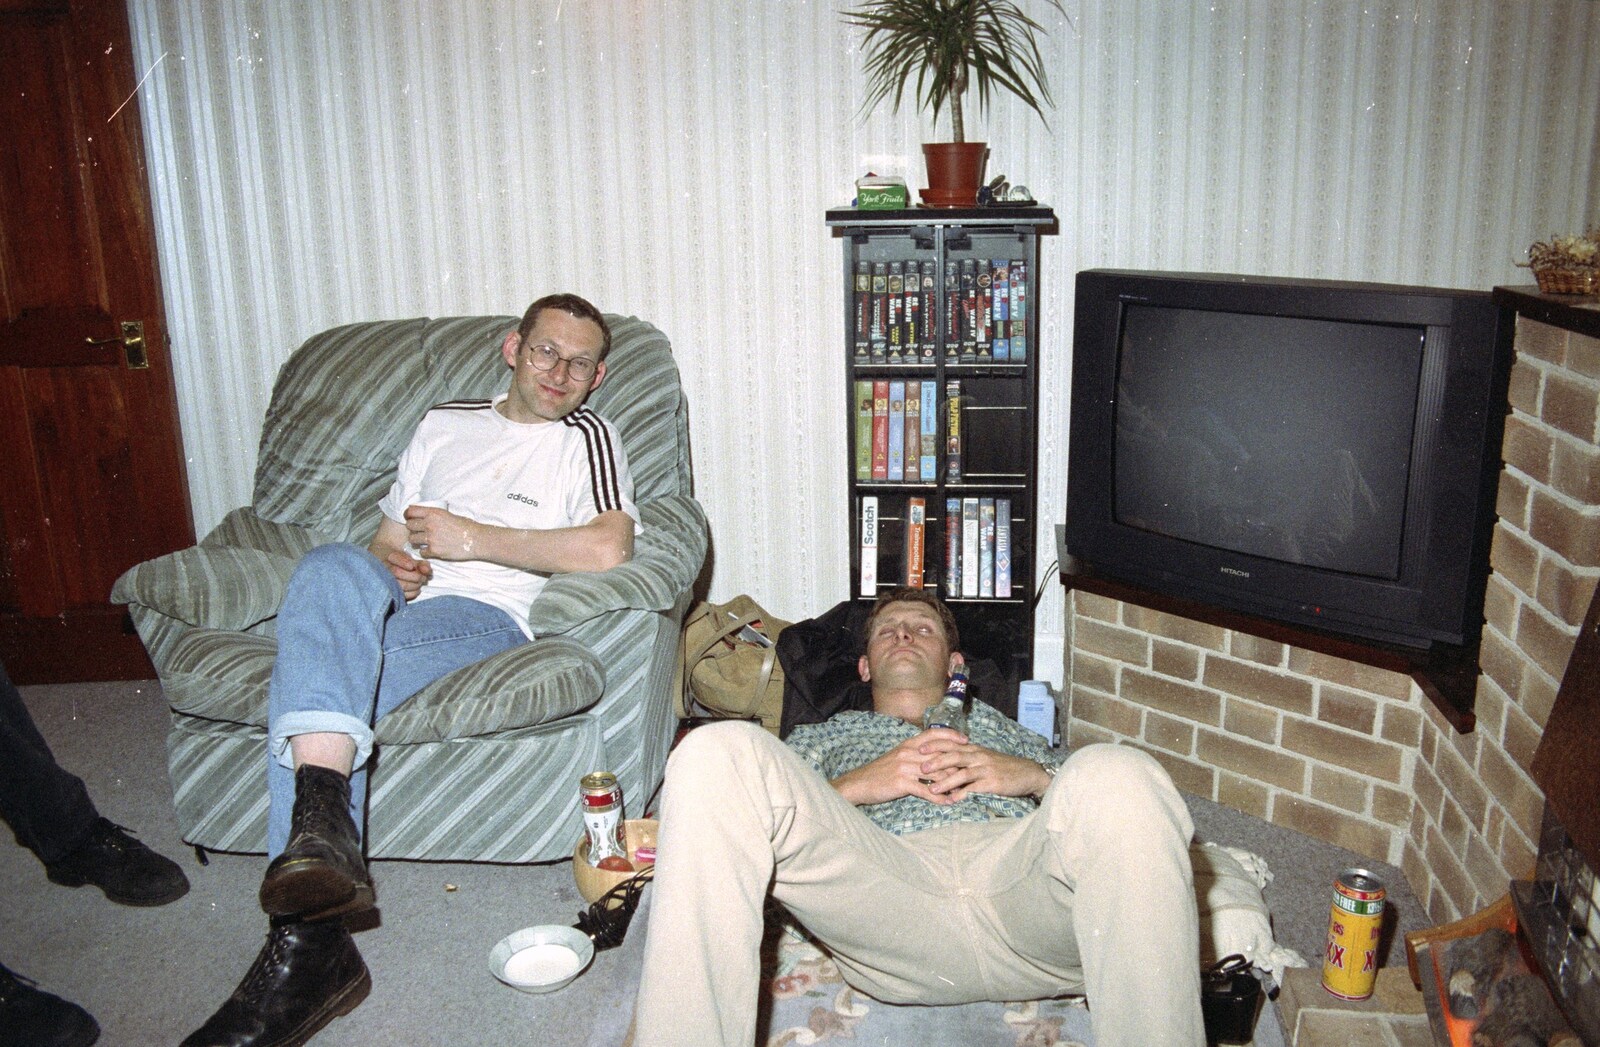 Dougie and Jon Segger from Dougie's Birthday and Adrian Leaves CISU, Ipswich, Suffolk - 29th June 1997